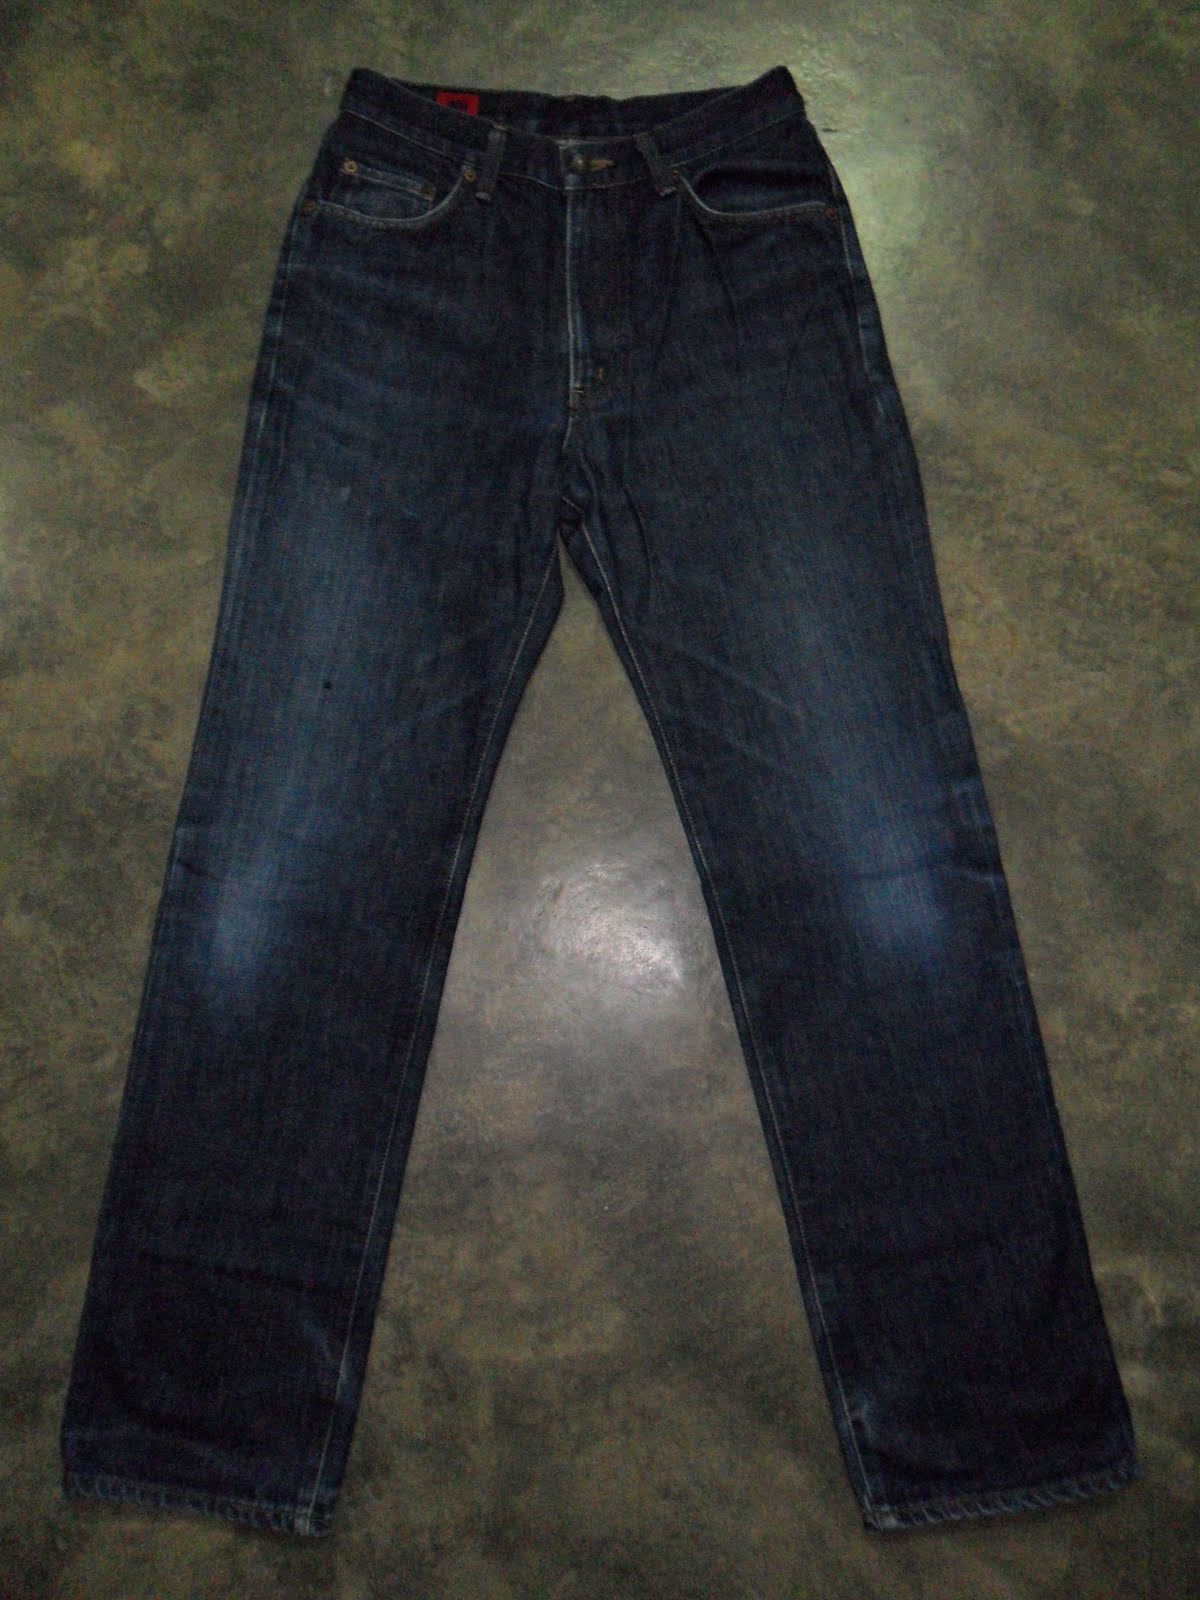 BUNDLEBARANGBAEK: Edwin 503 Jeans(SOLD)